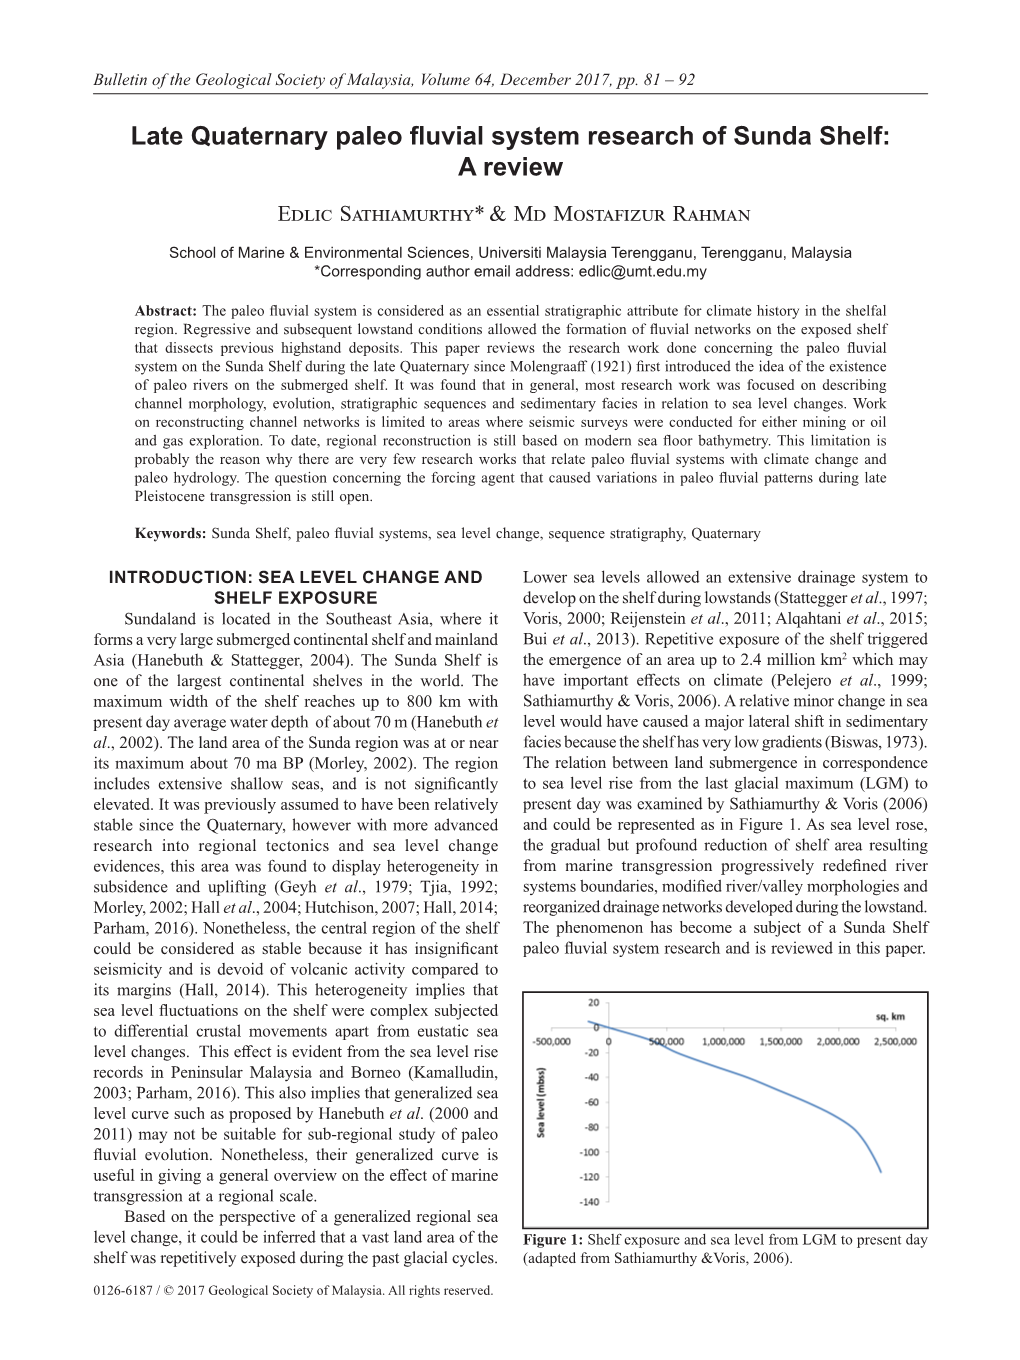 Late Quaternary Paleo Fluvial System Research of Sunda Shelf: a Review Edlic Sathiamurthy* & Md Mostafizur Rahman